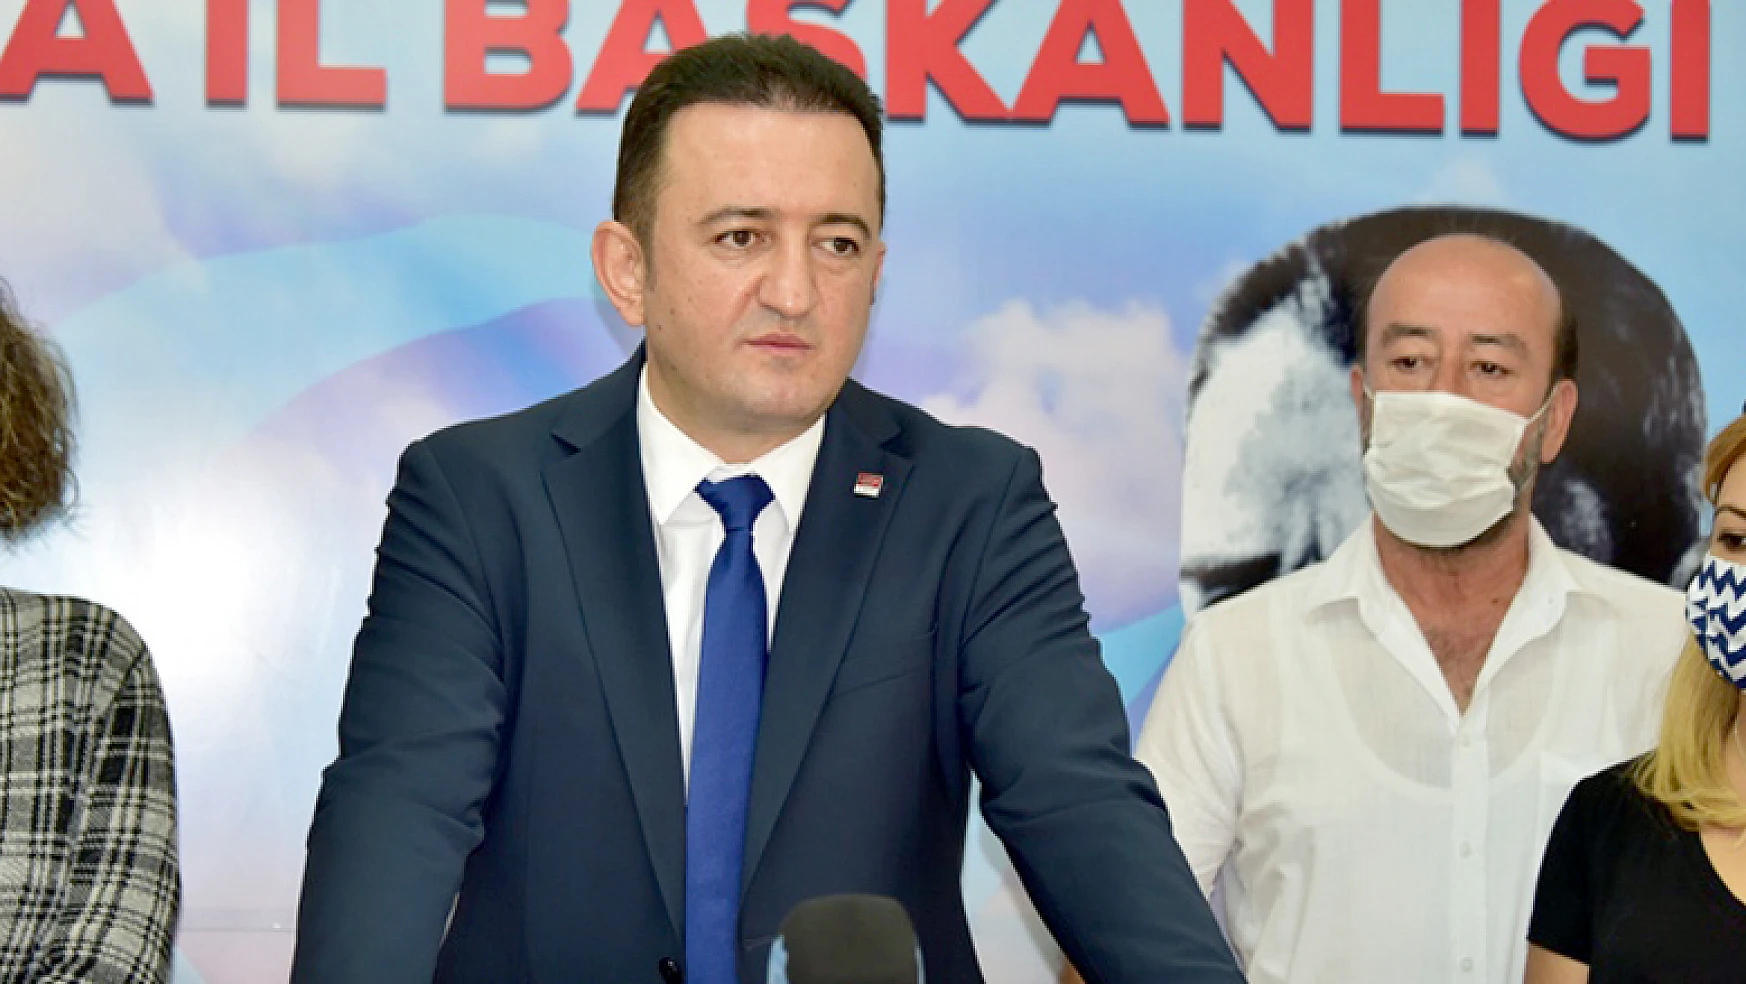 CHP Konya İl Başkanı Barış Bektaş'tan, acilen Esnaf Bakanlığı kurulmalıdır çağrısı